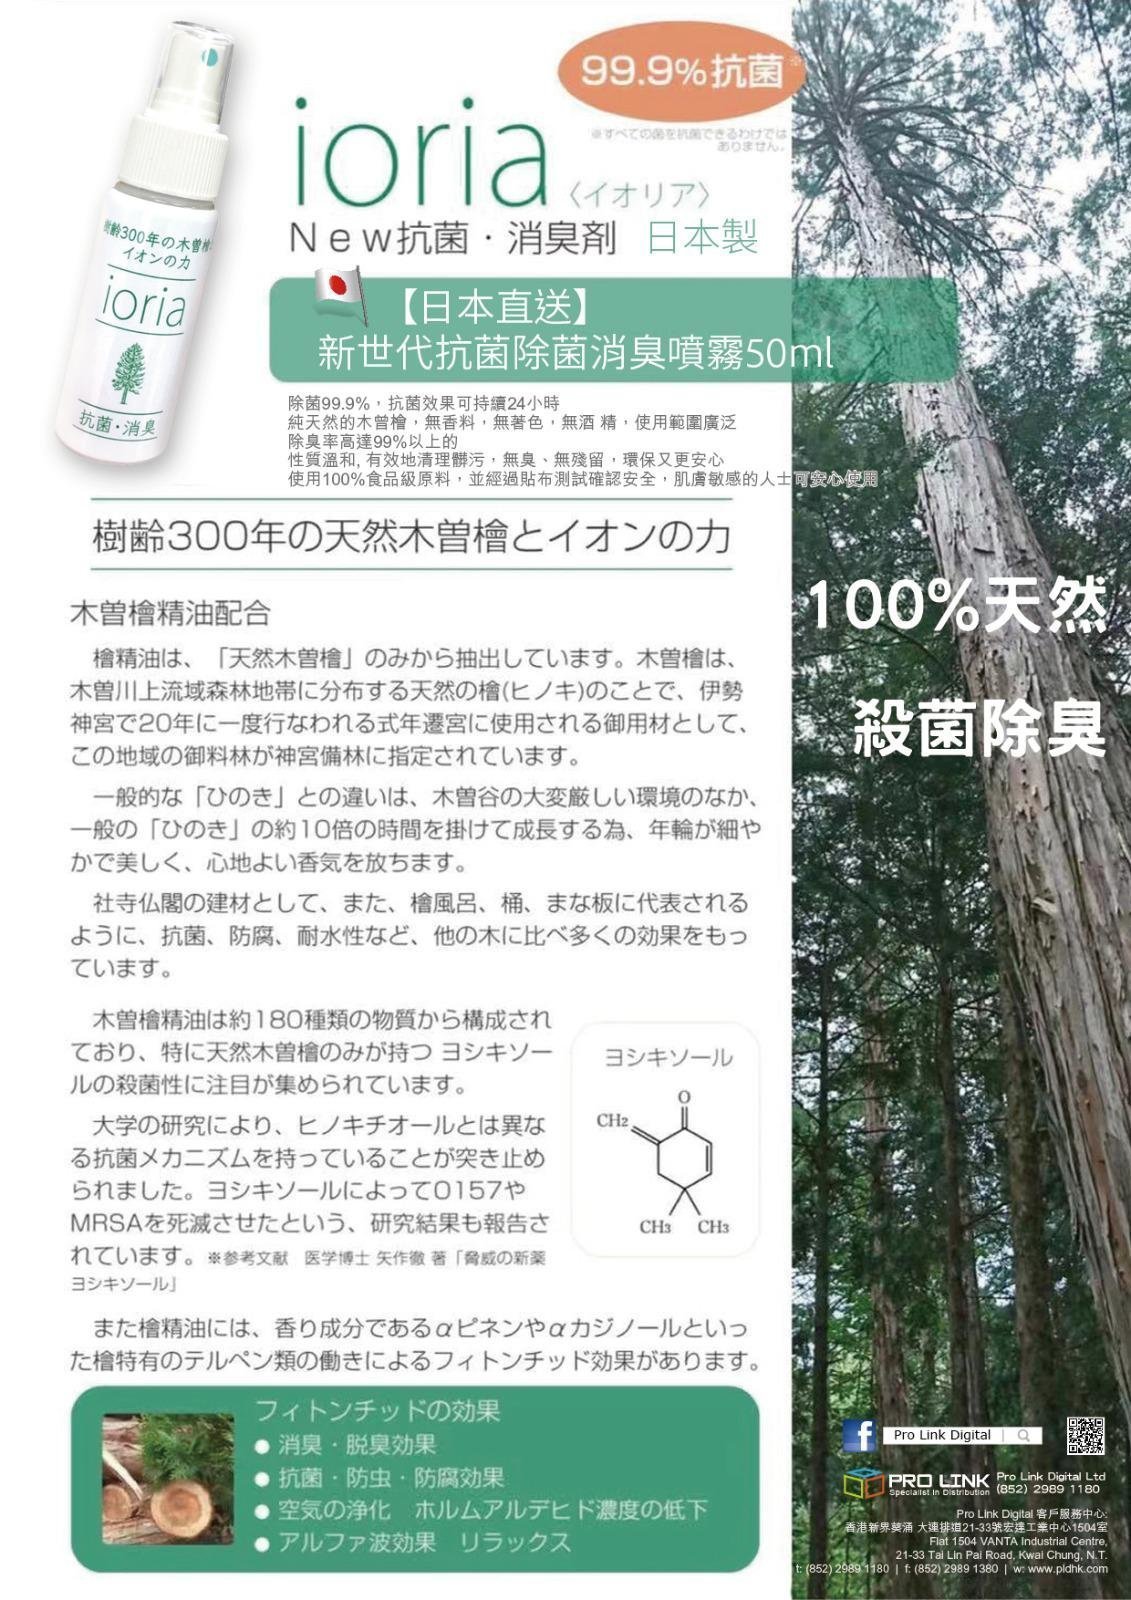 IORIA - 99.9% Antibacterial Odor Eliminator Spray 50ml [Made in Japan]